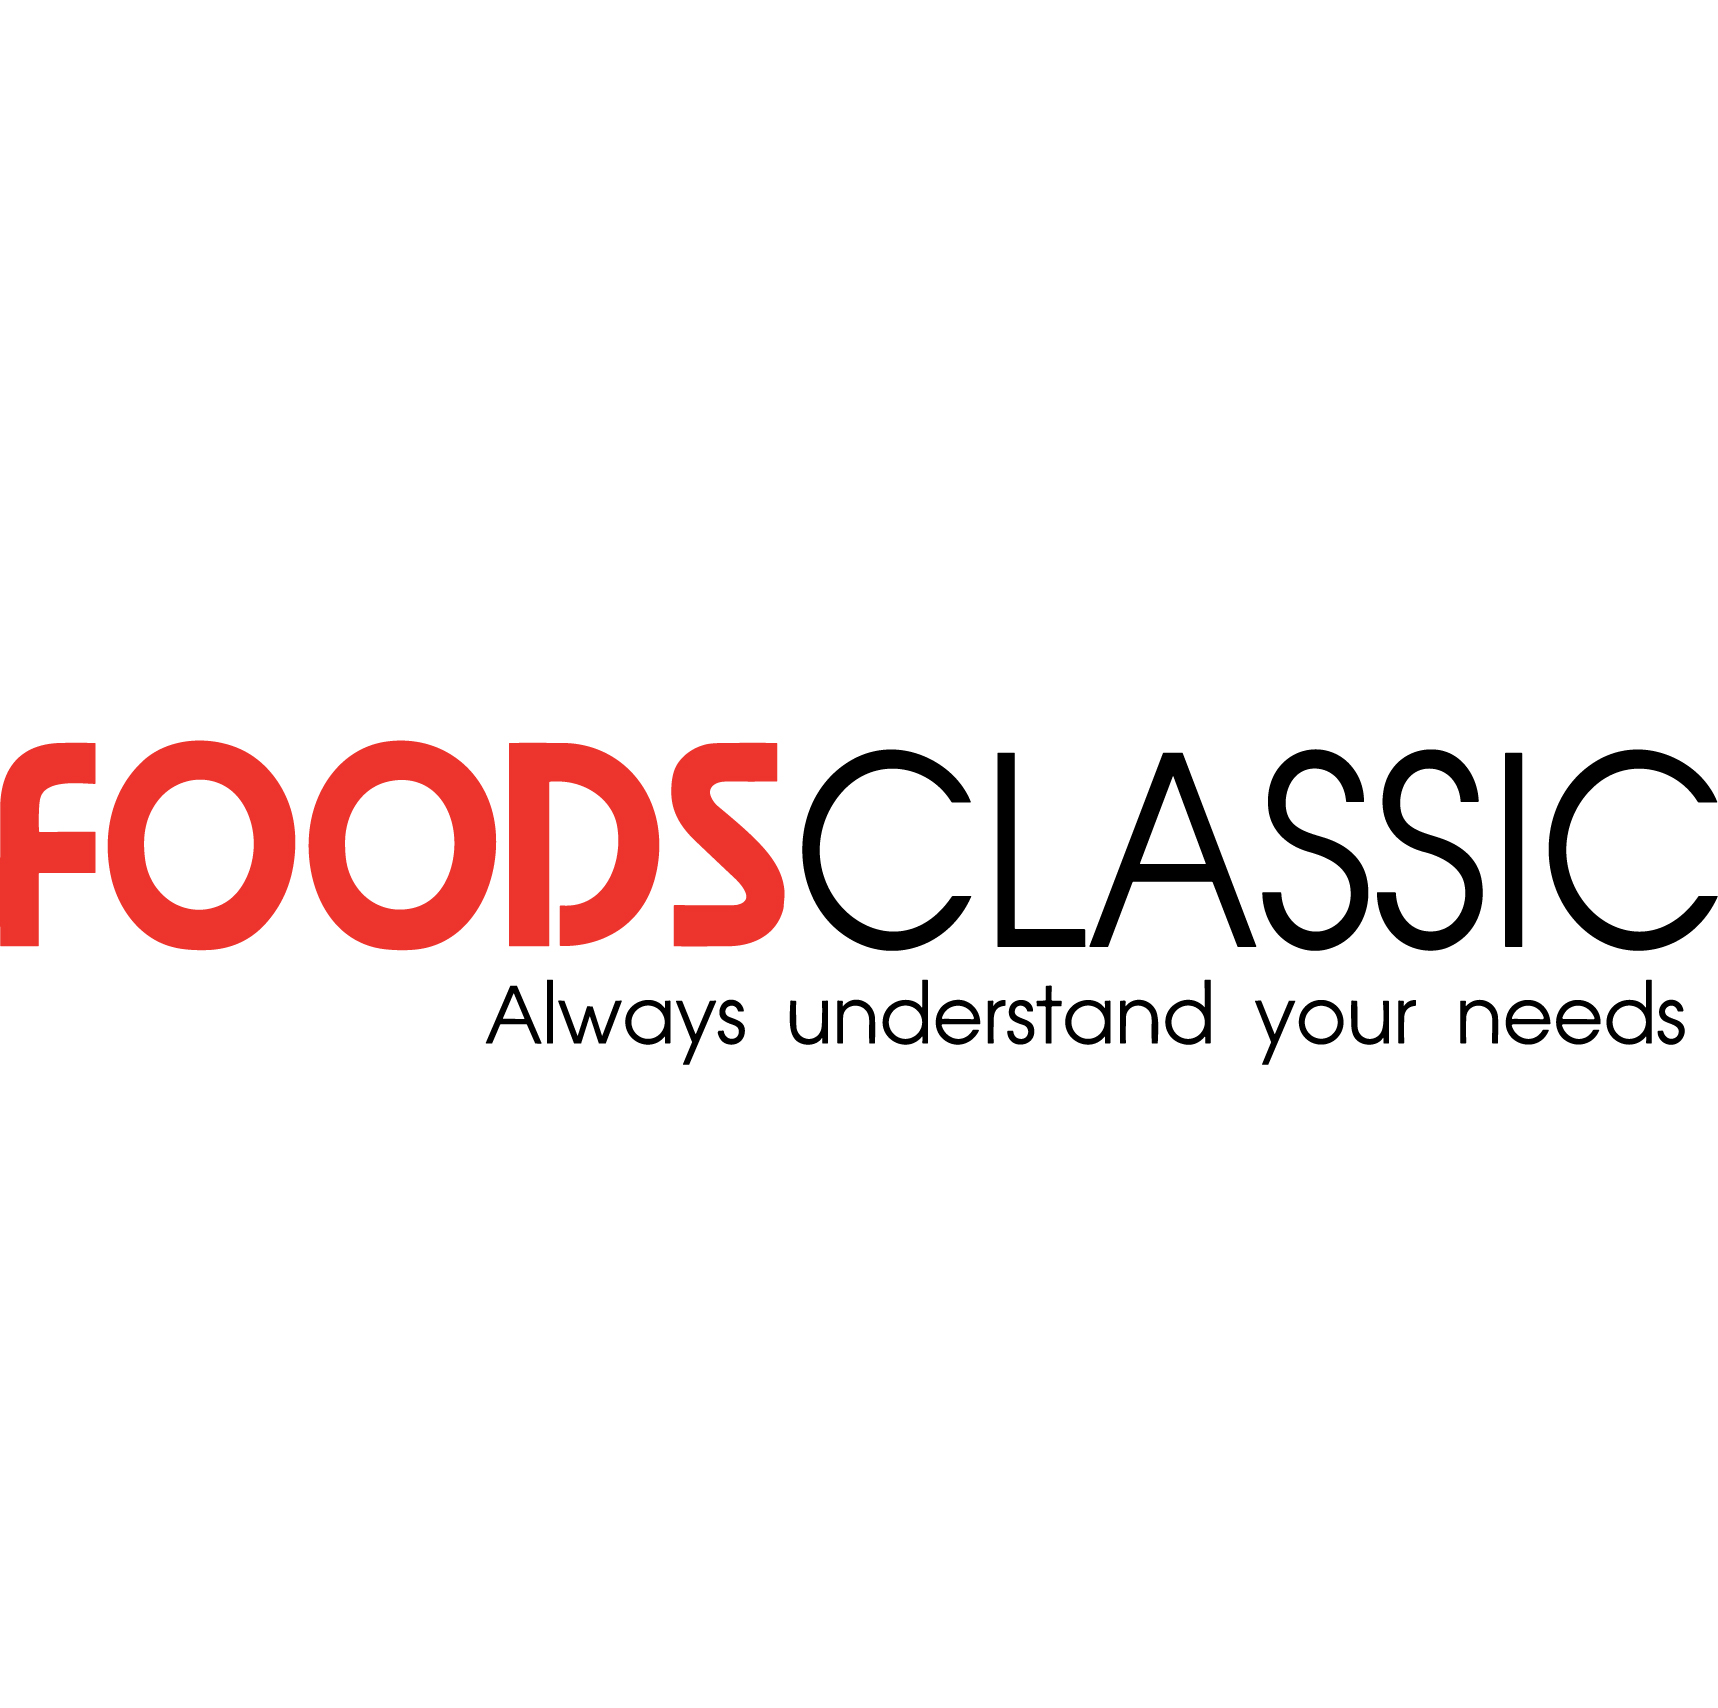 Brand : Foods Classic